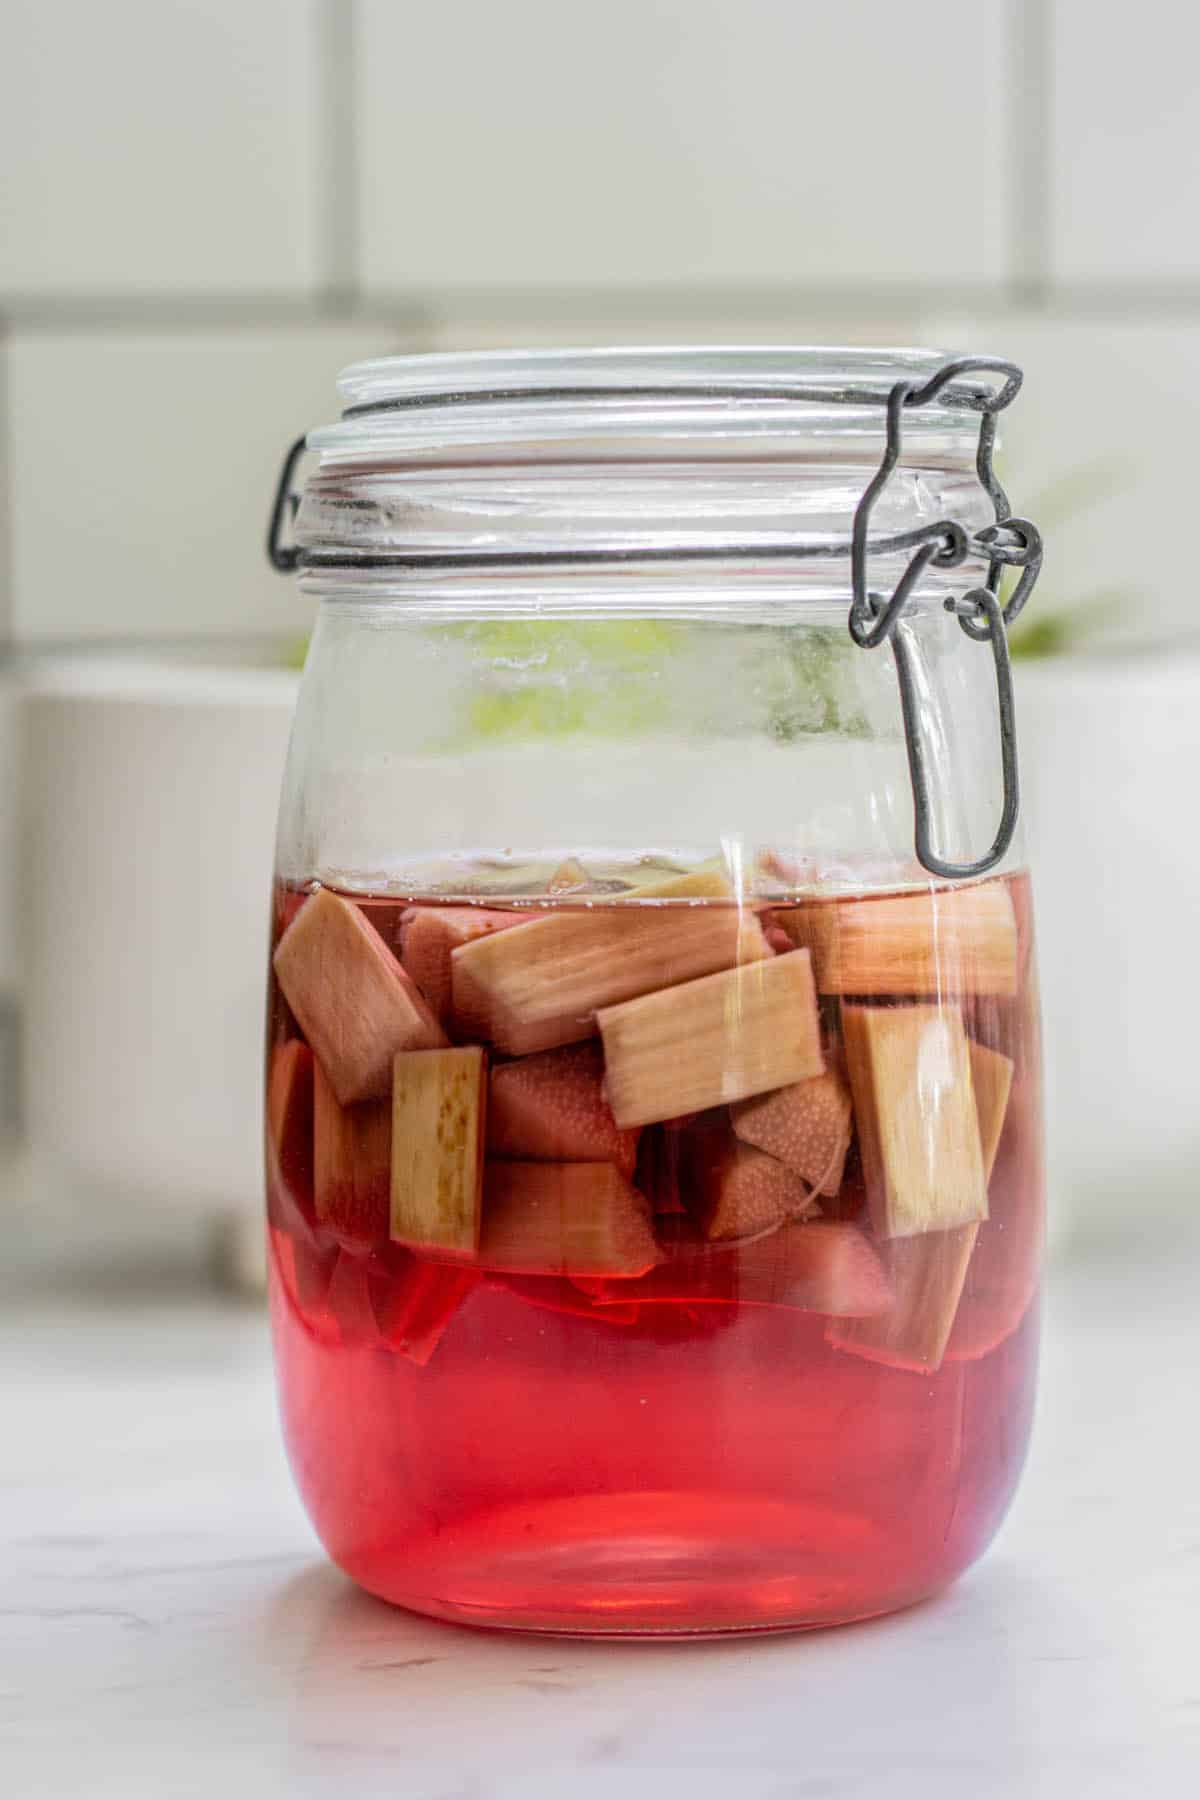 rhubarb infused vodka being made in a large sealed jar.